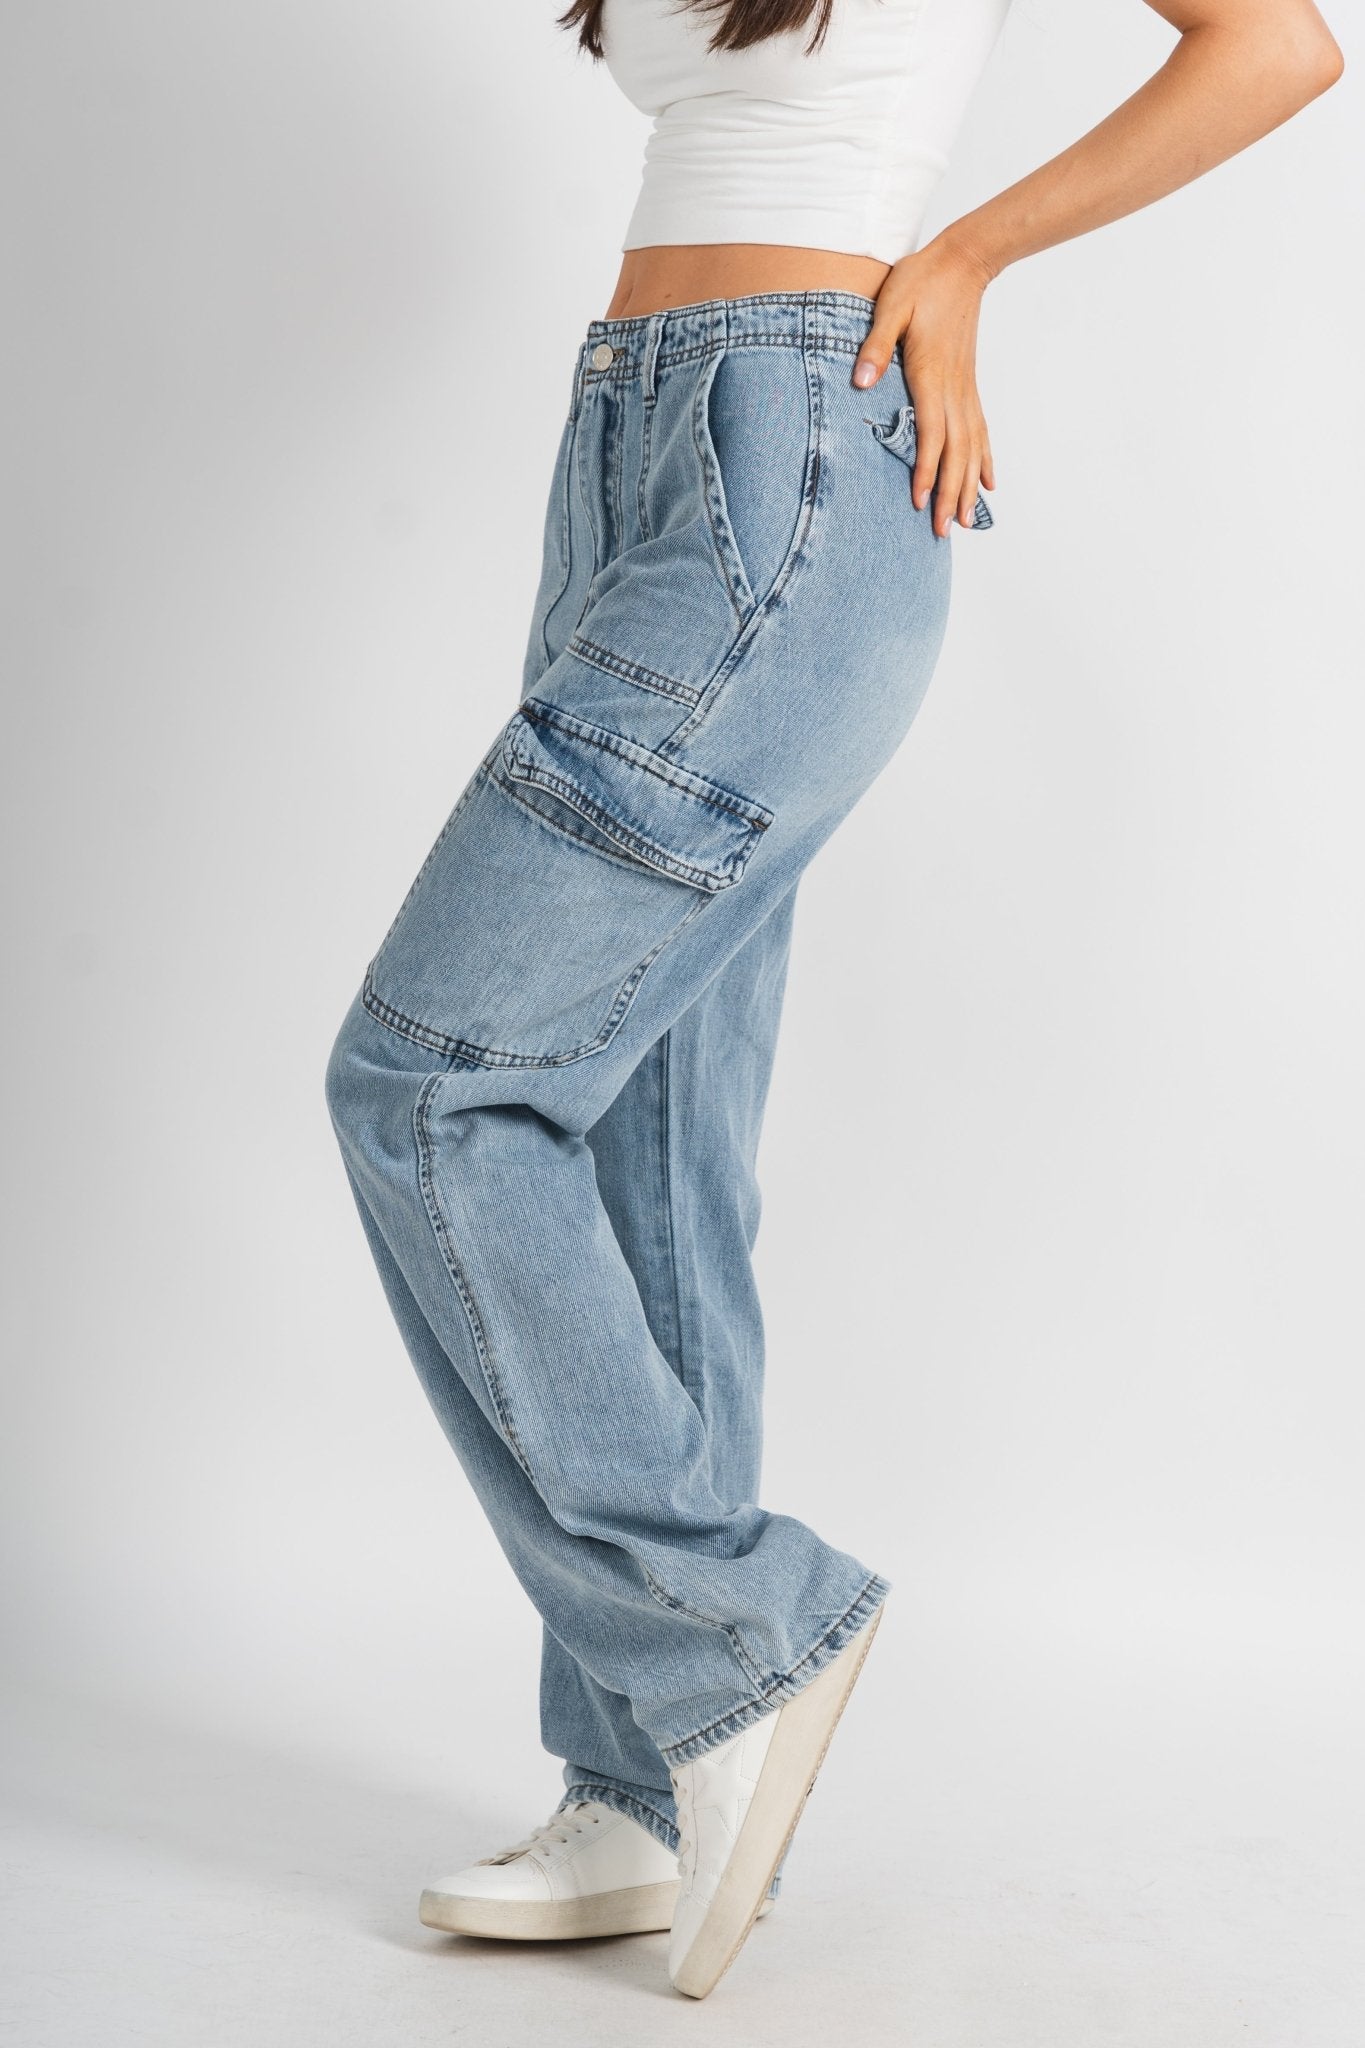 Utility cargo jeans medium denim | Lush Fashion Lounge: boutique women's jeans, fashion jeans for women, affordable fashion jeans, cute boutique jeans